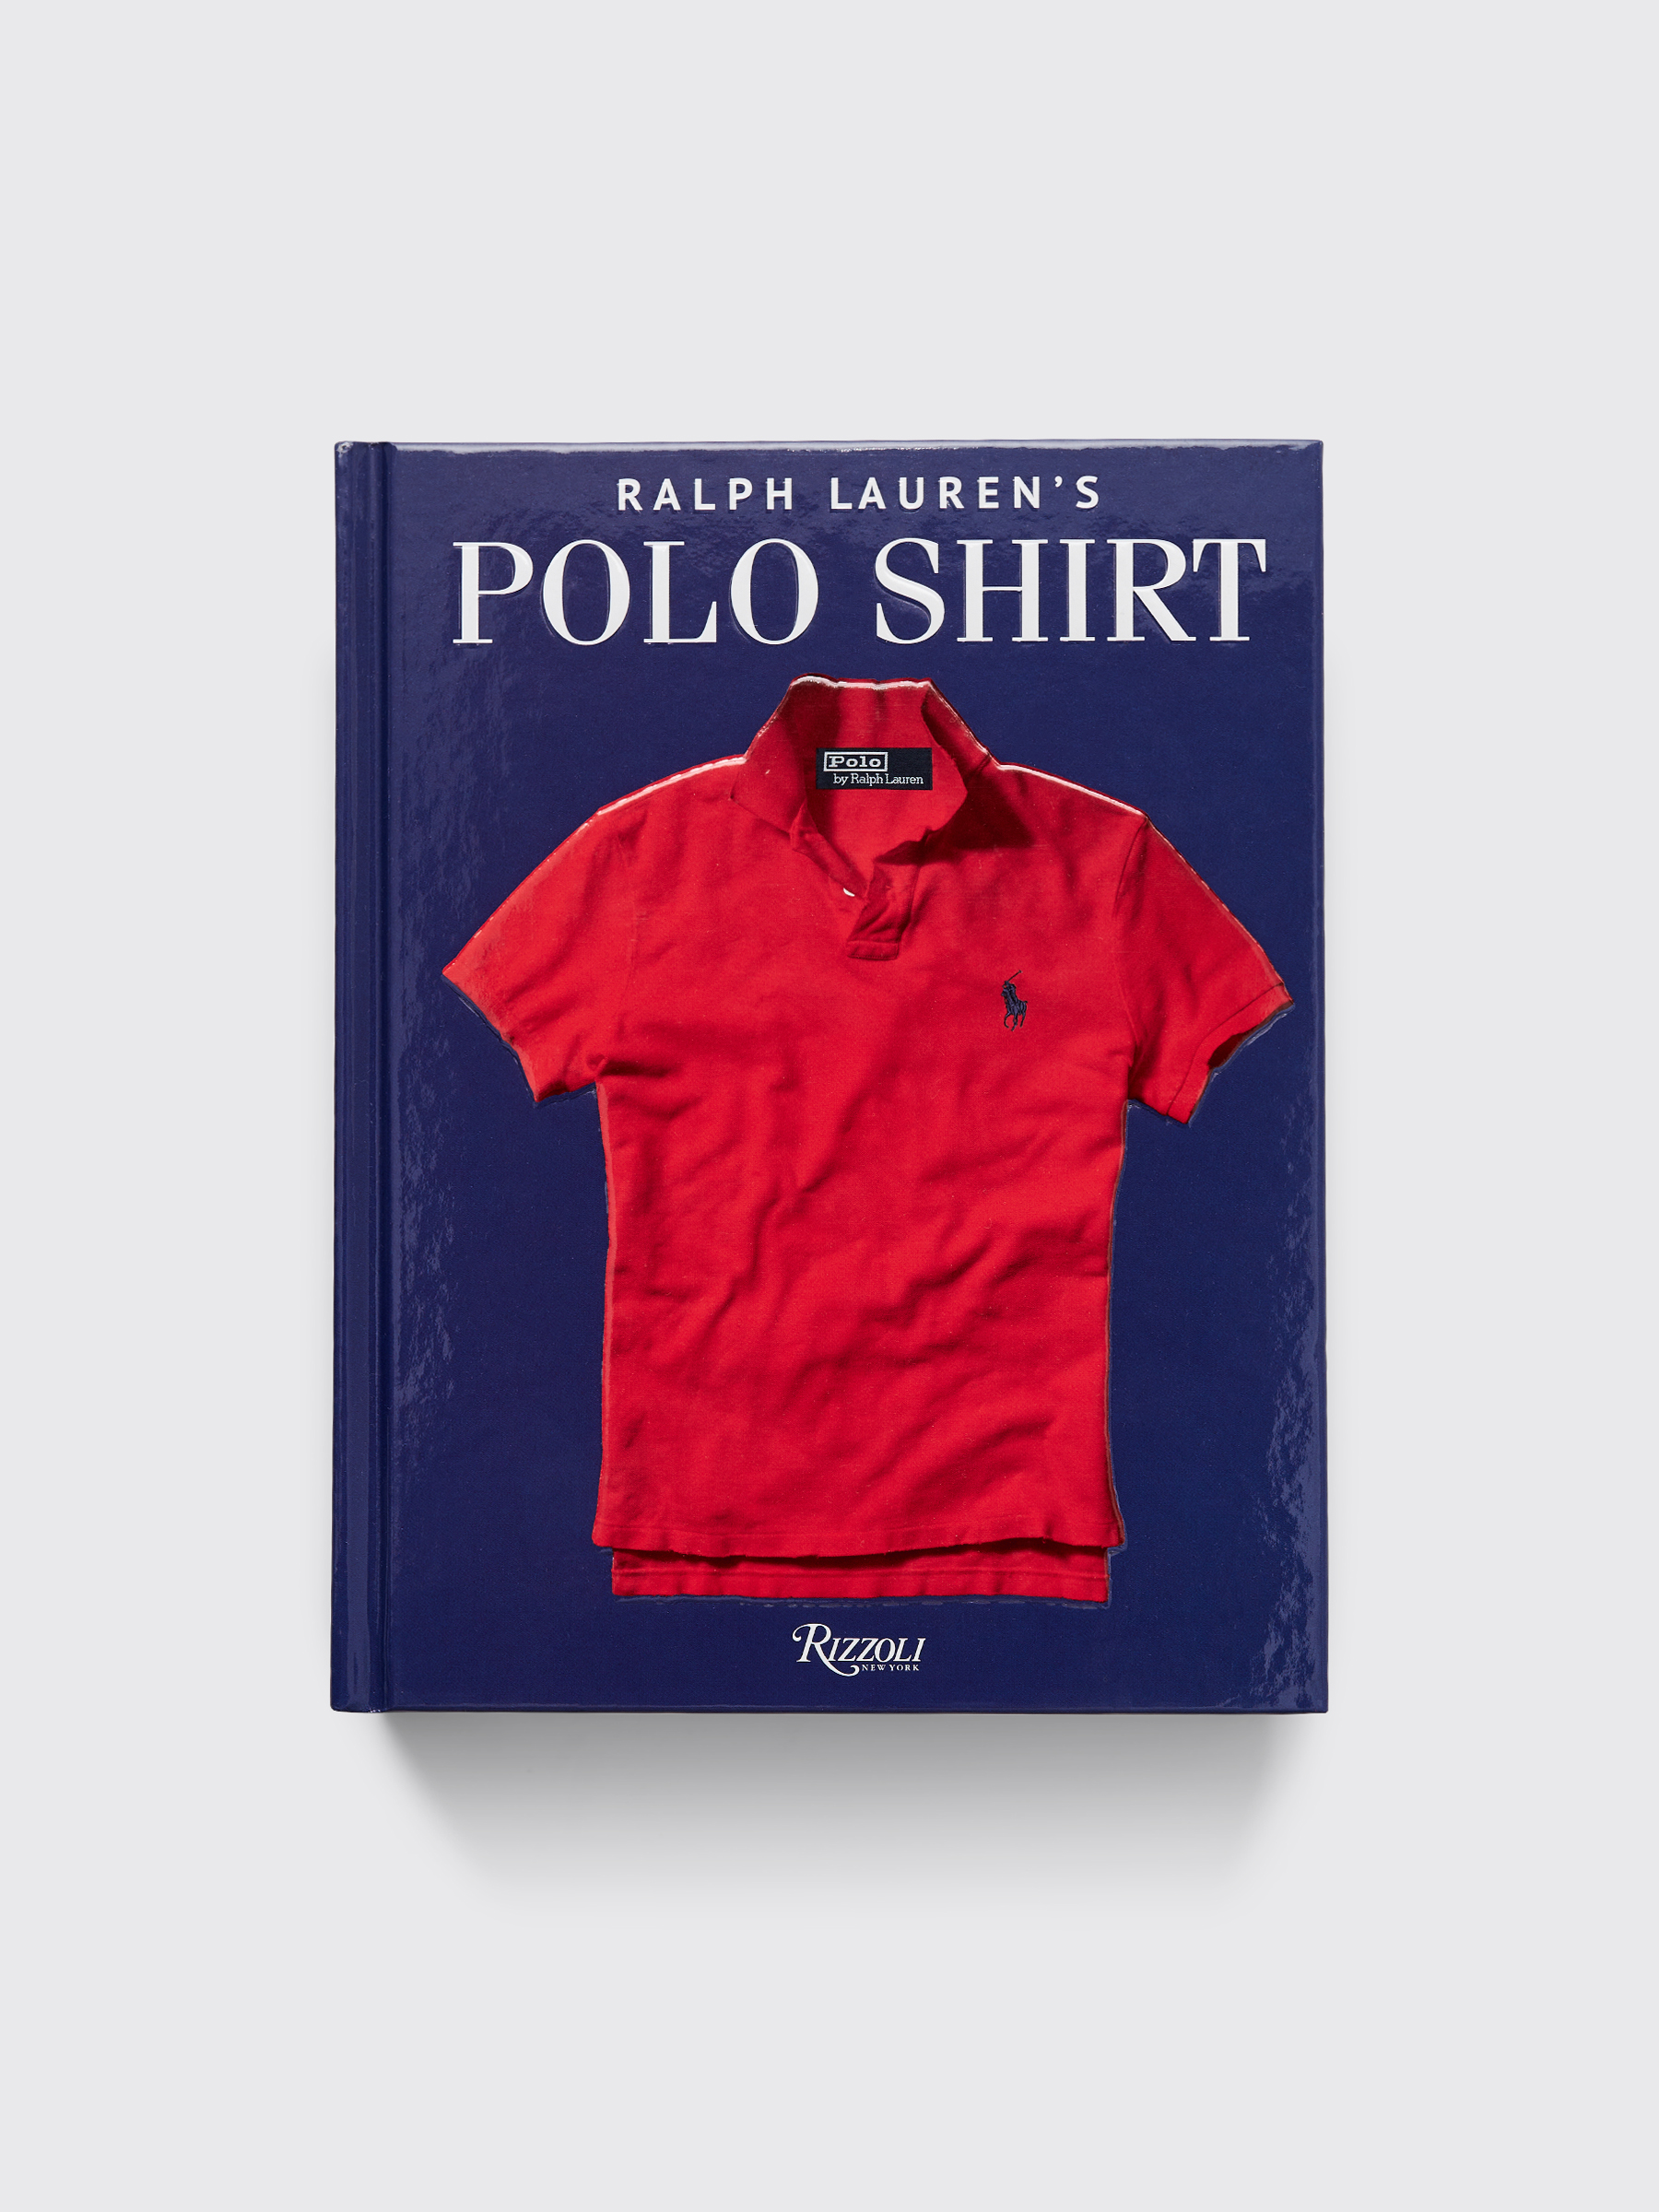 Très Bien - Ralph Lauren’s Polo Shirt Book